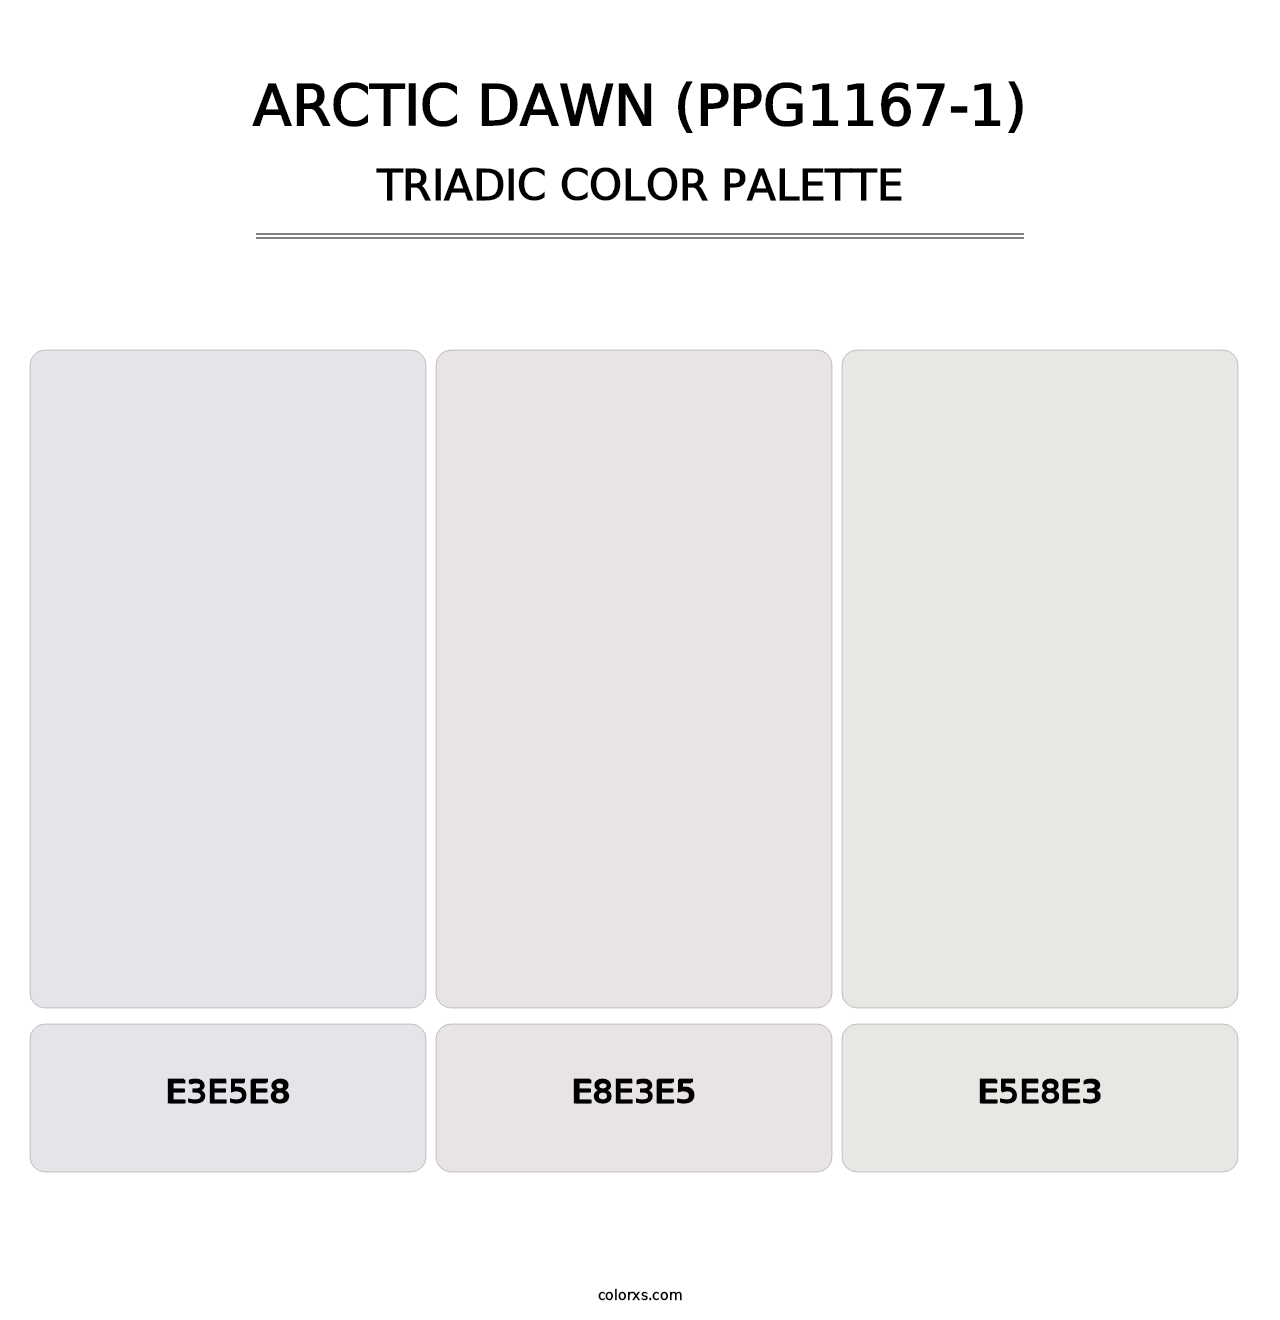 Arctic Dawn (PPG1167-1) - Triadic Color Palette